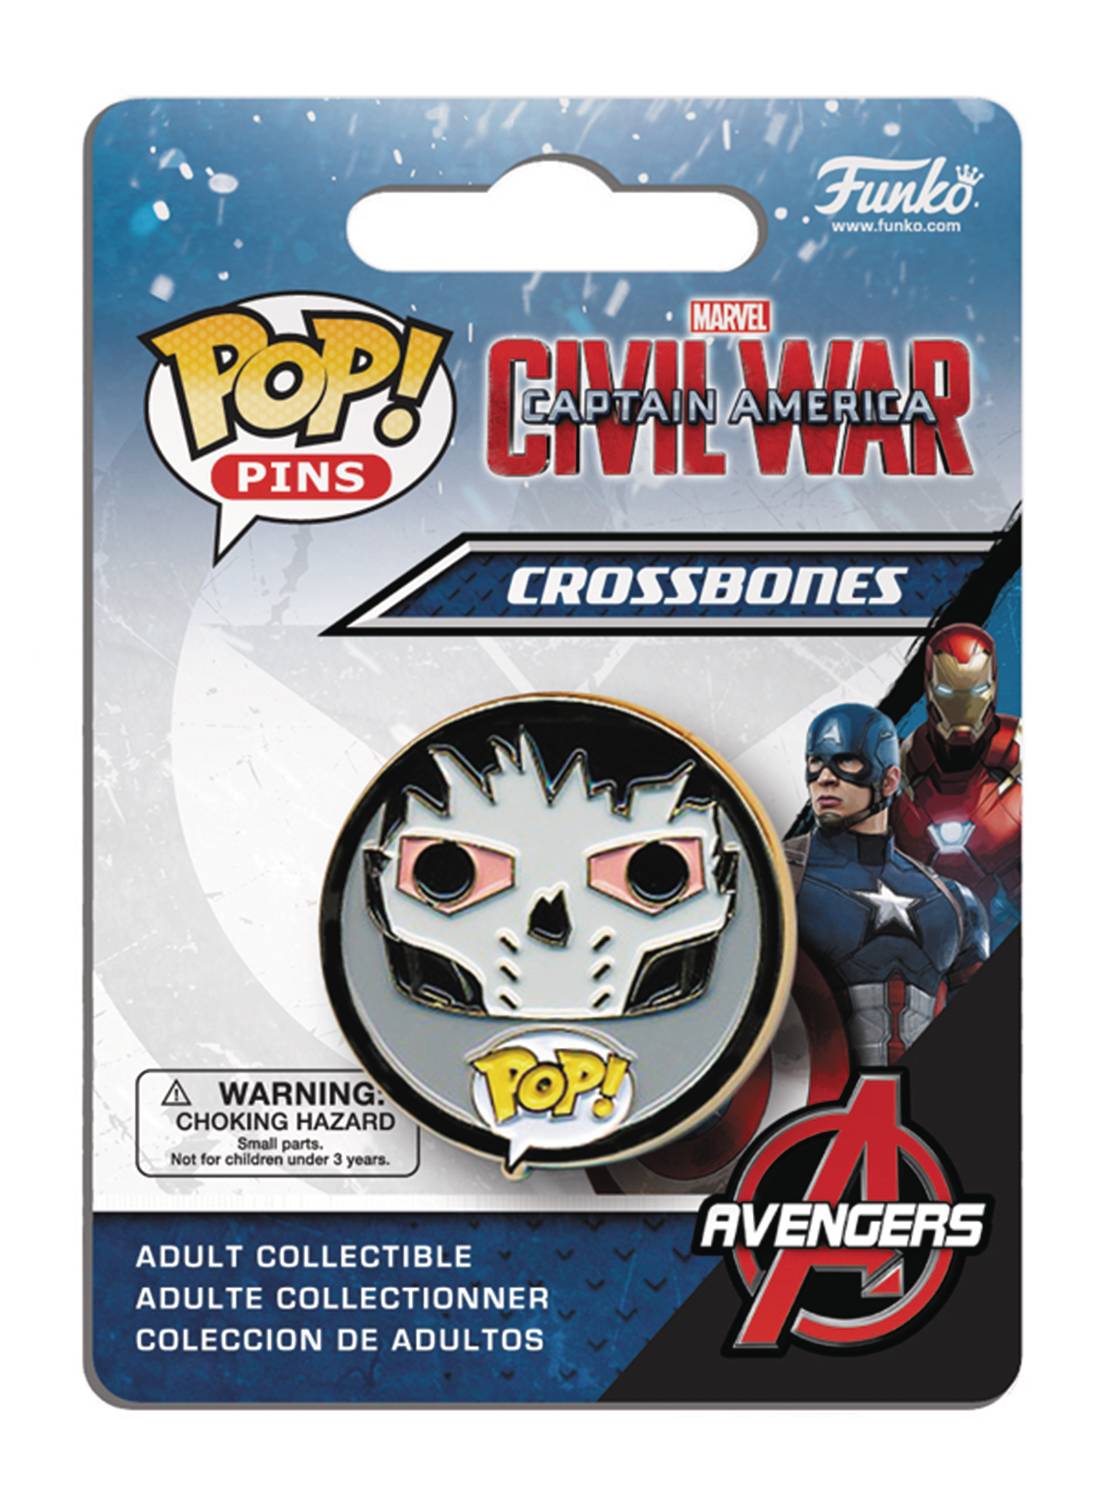 Pop Pins Captain America 3 Crossbones